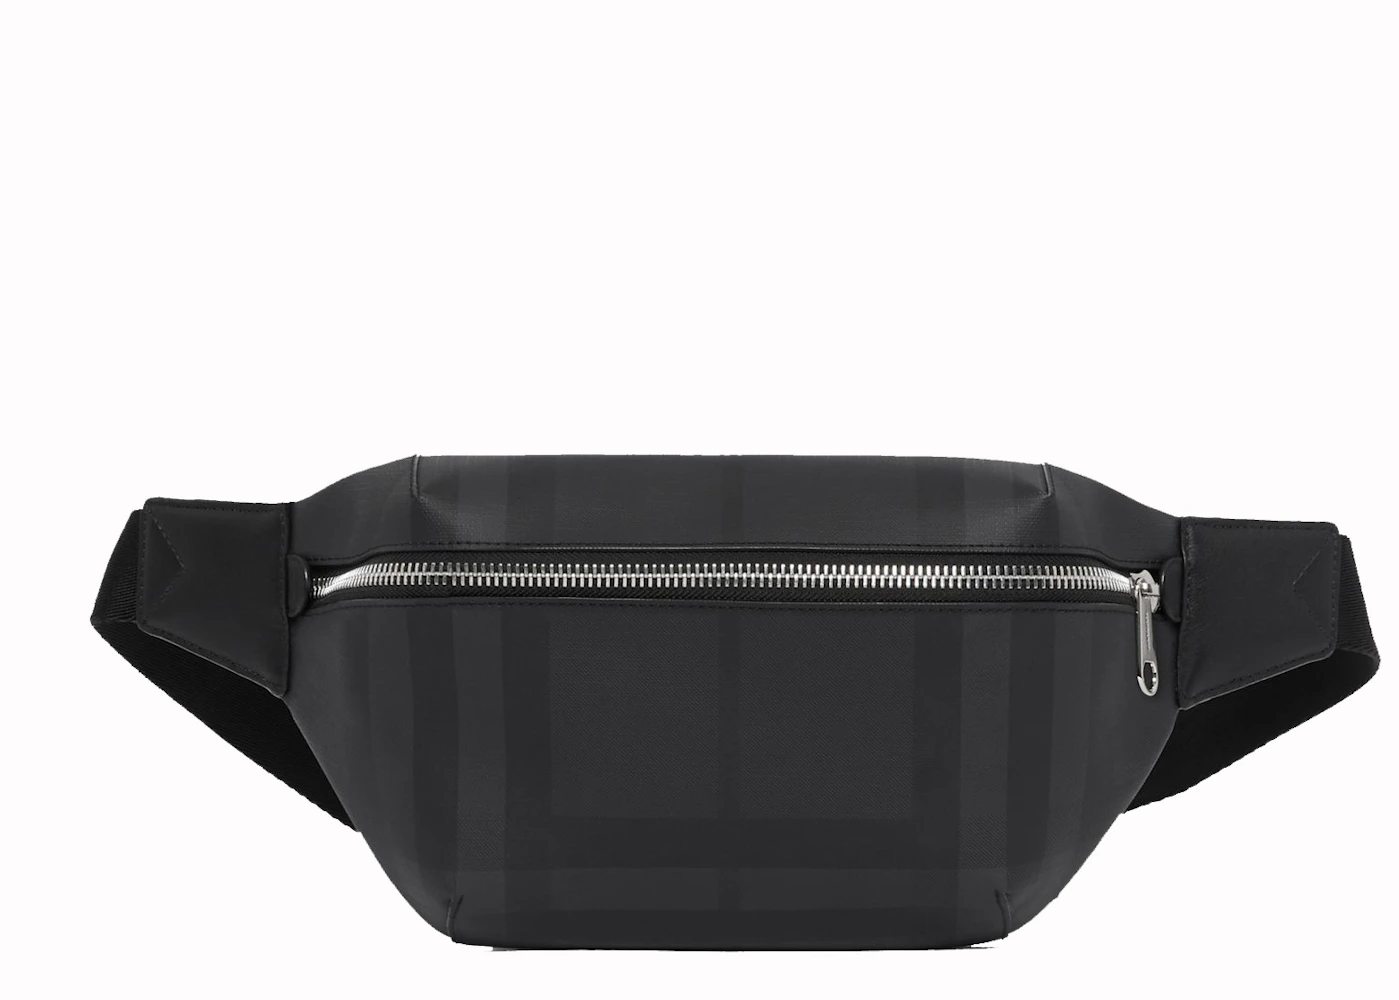 Black & Gray Checkered Bum Bag – Glow the Label